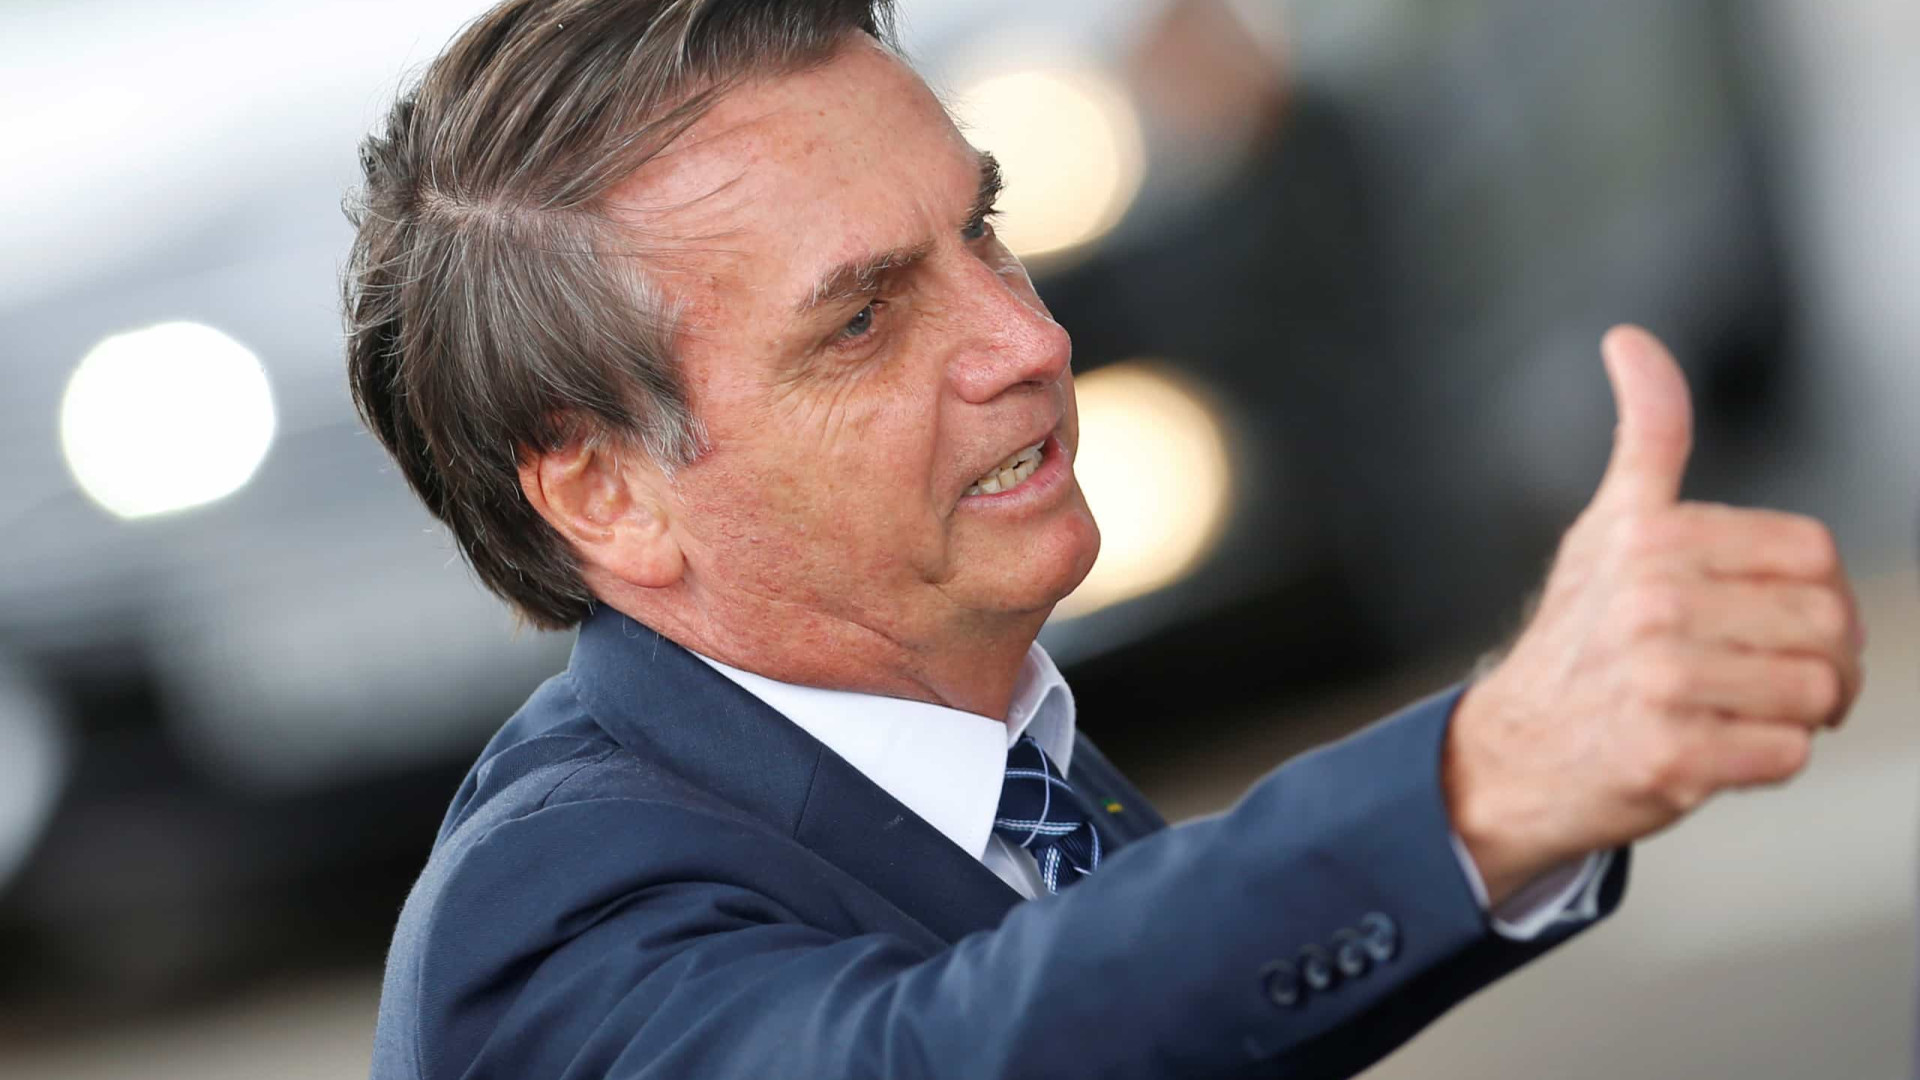 'Democracia nunca esteve tão forte', diz Bolsonaro